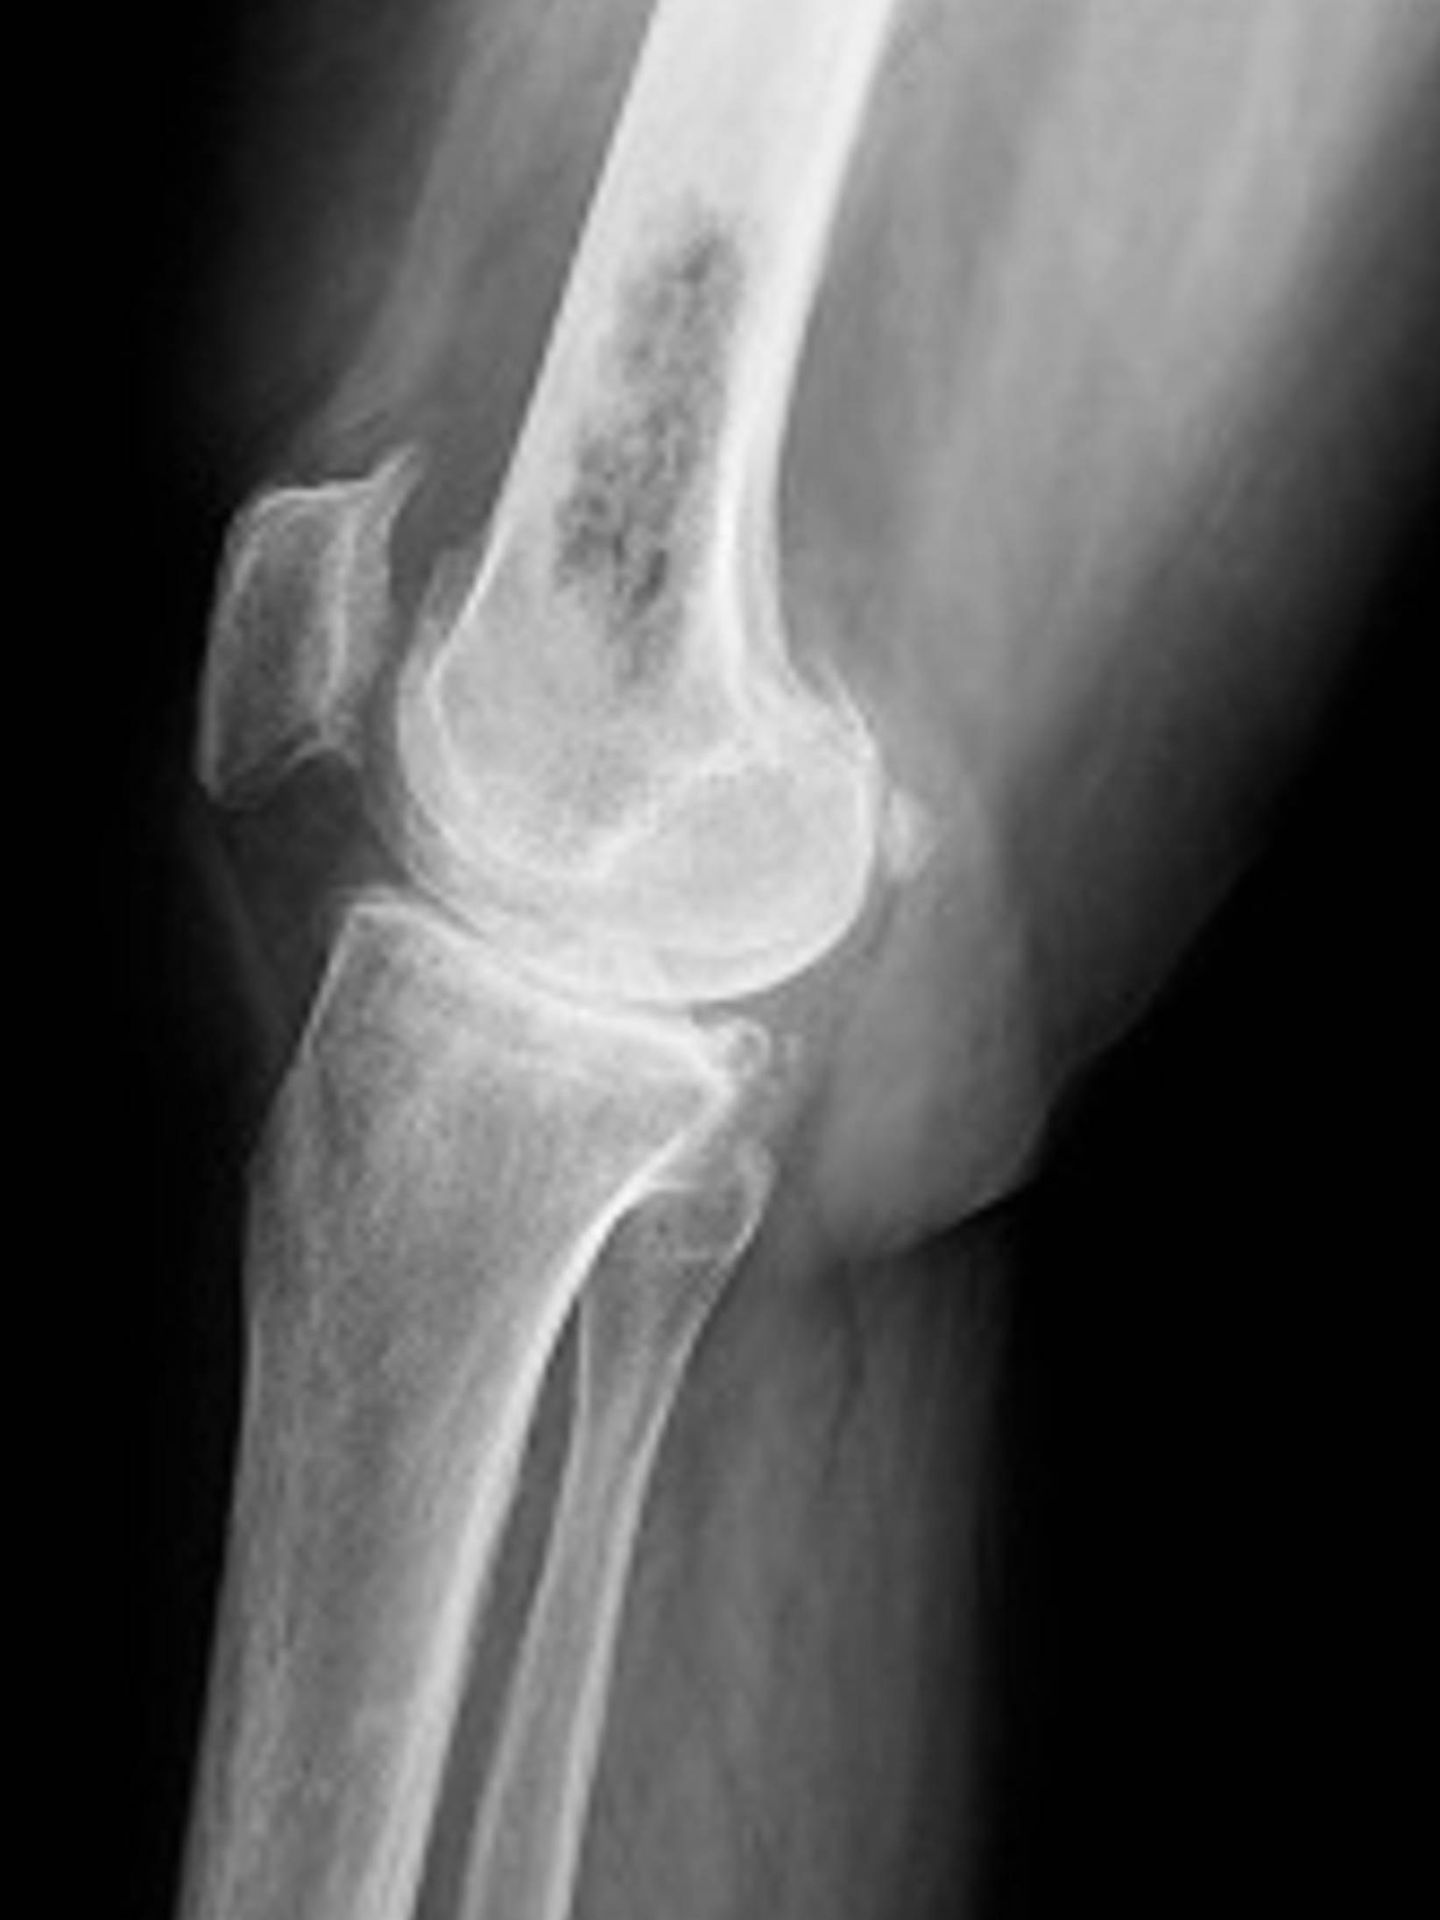 Una radiografía donde se ve una rodilla con osteosarcoma. (MedlinePlus)